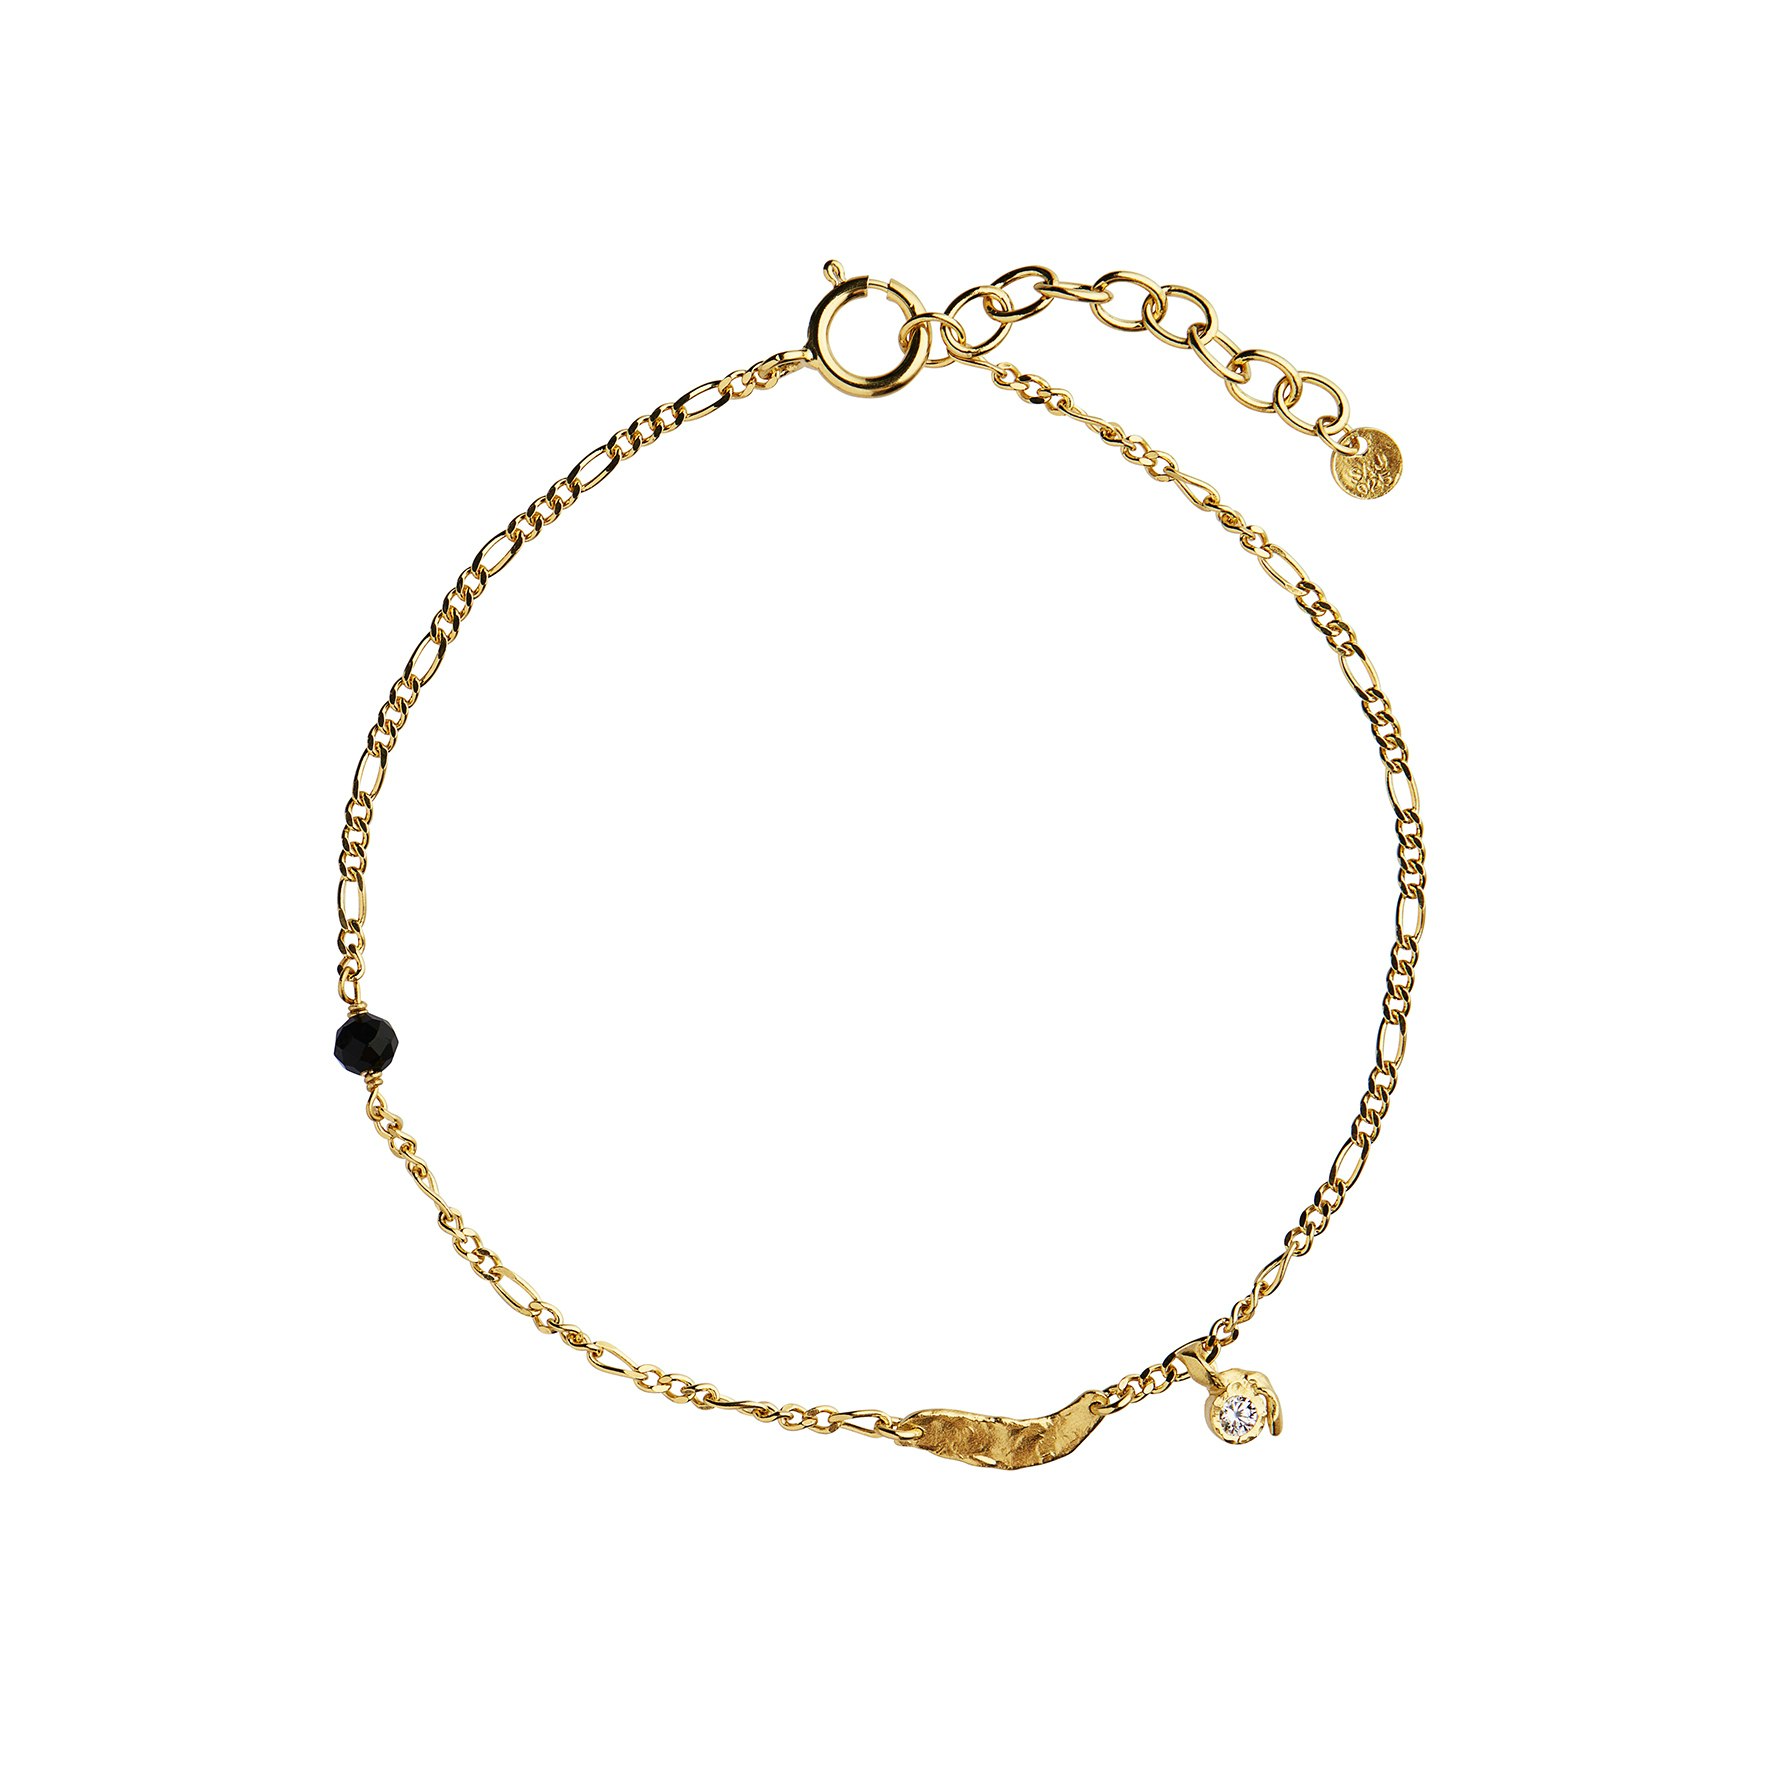 Flow Splash Bracelet With Stones van STINE A Jewelry in Verguld-Zilver Sterling 925